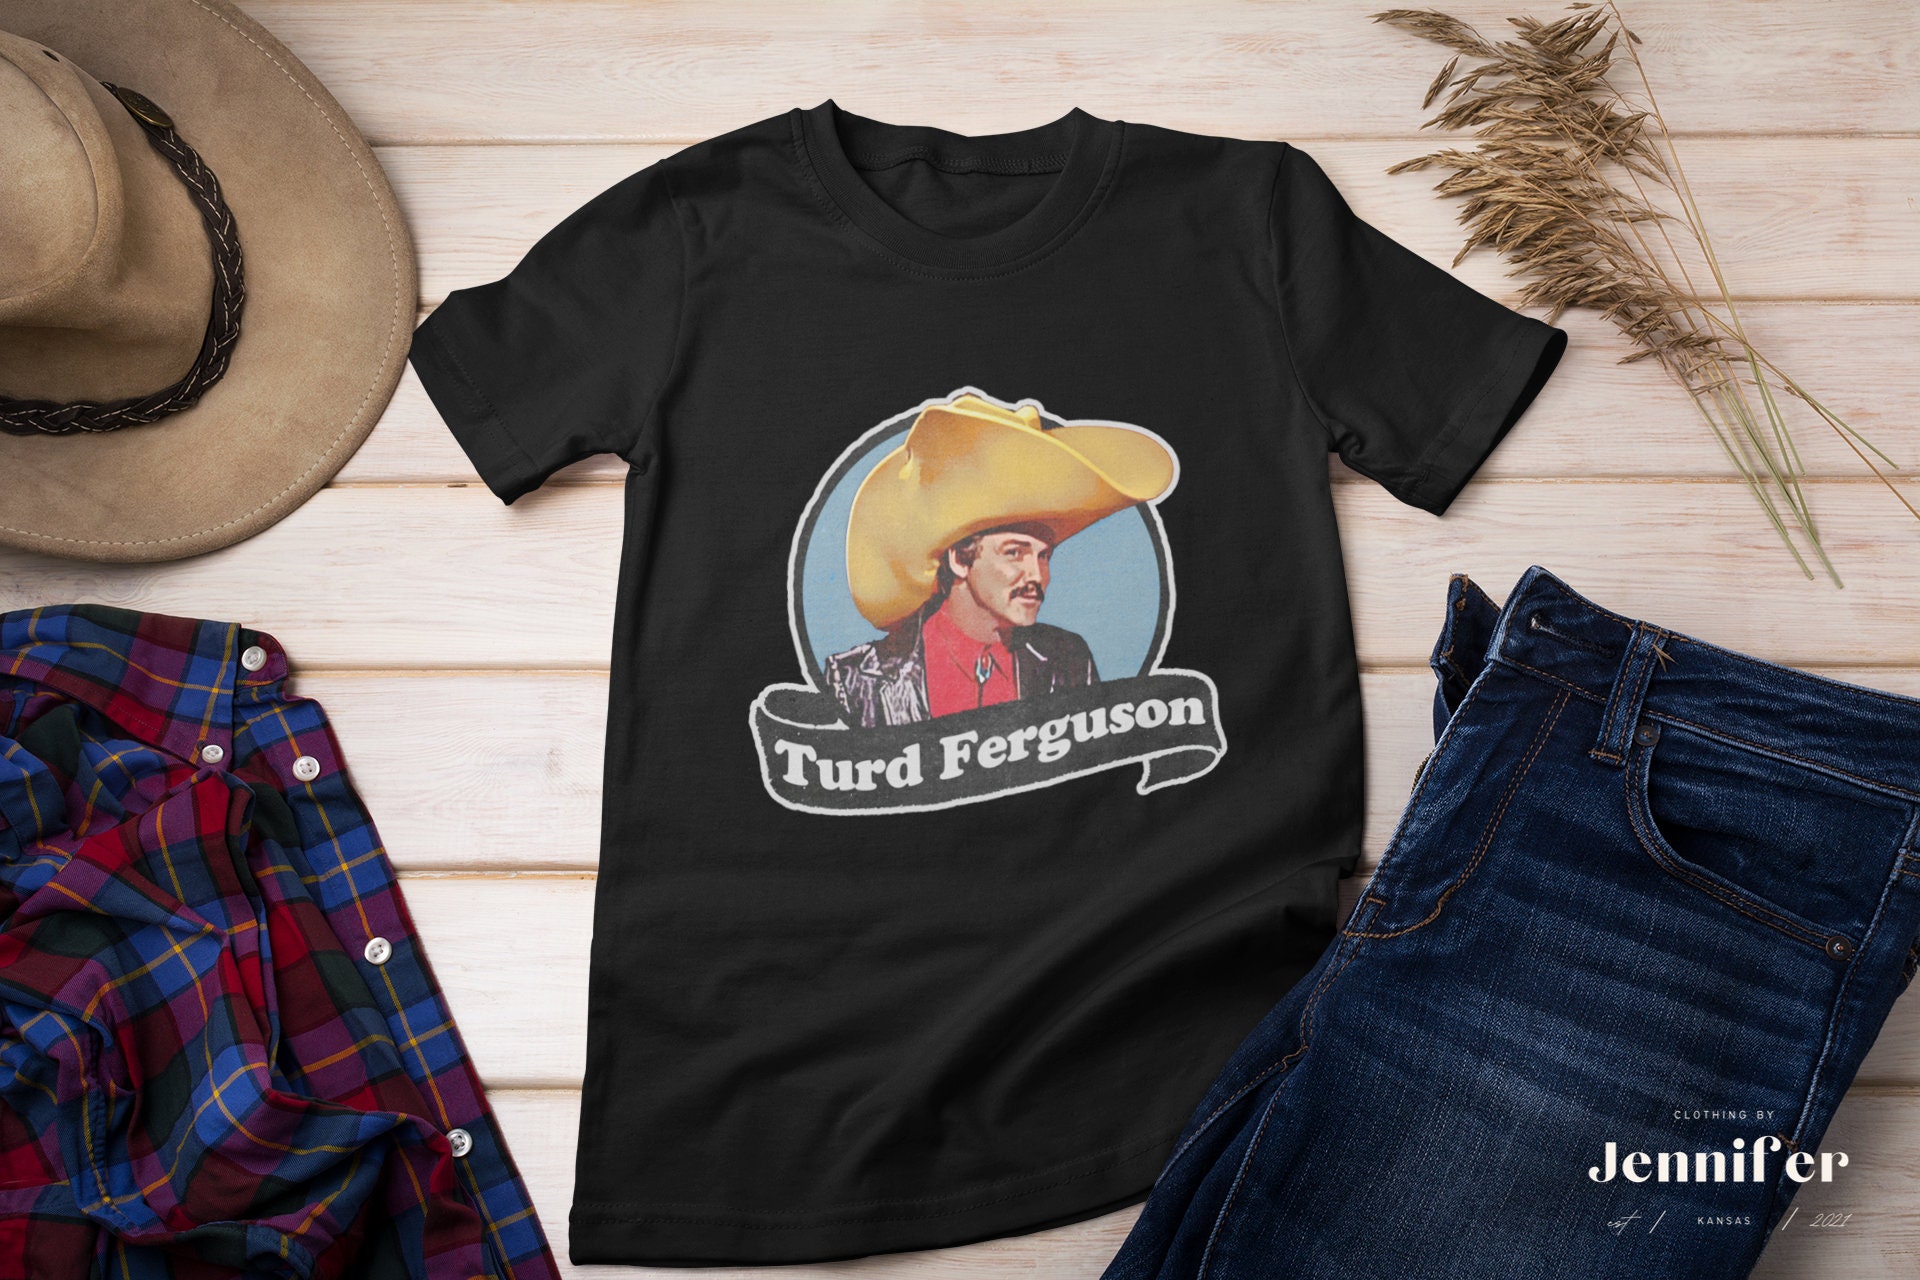 Turd Ferguson Shirt - Etsy